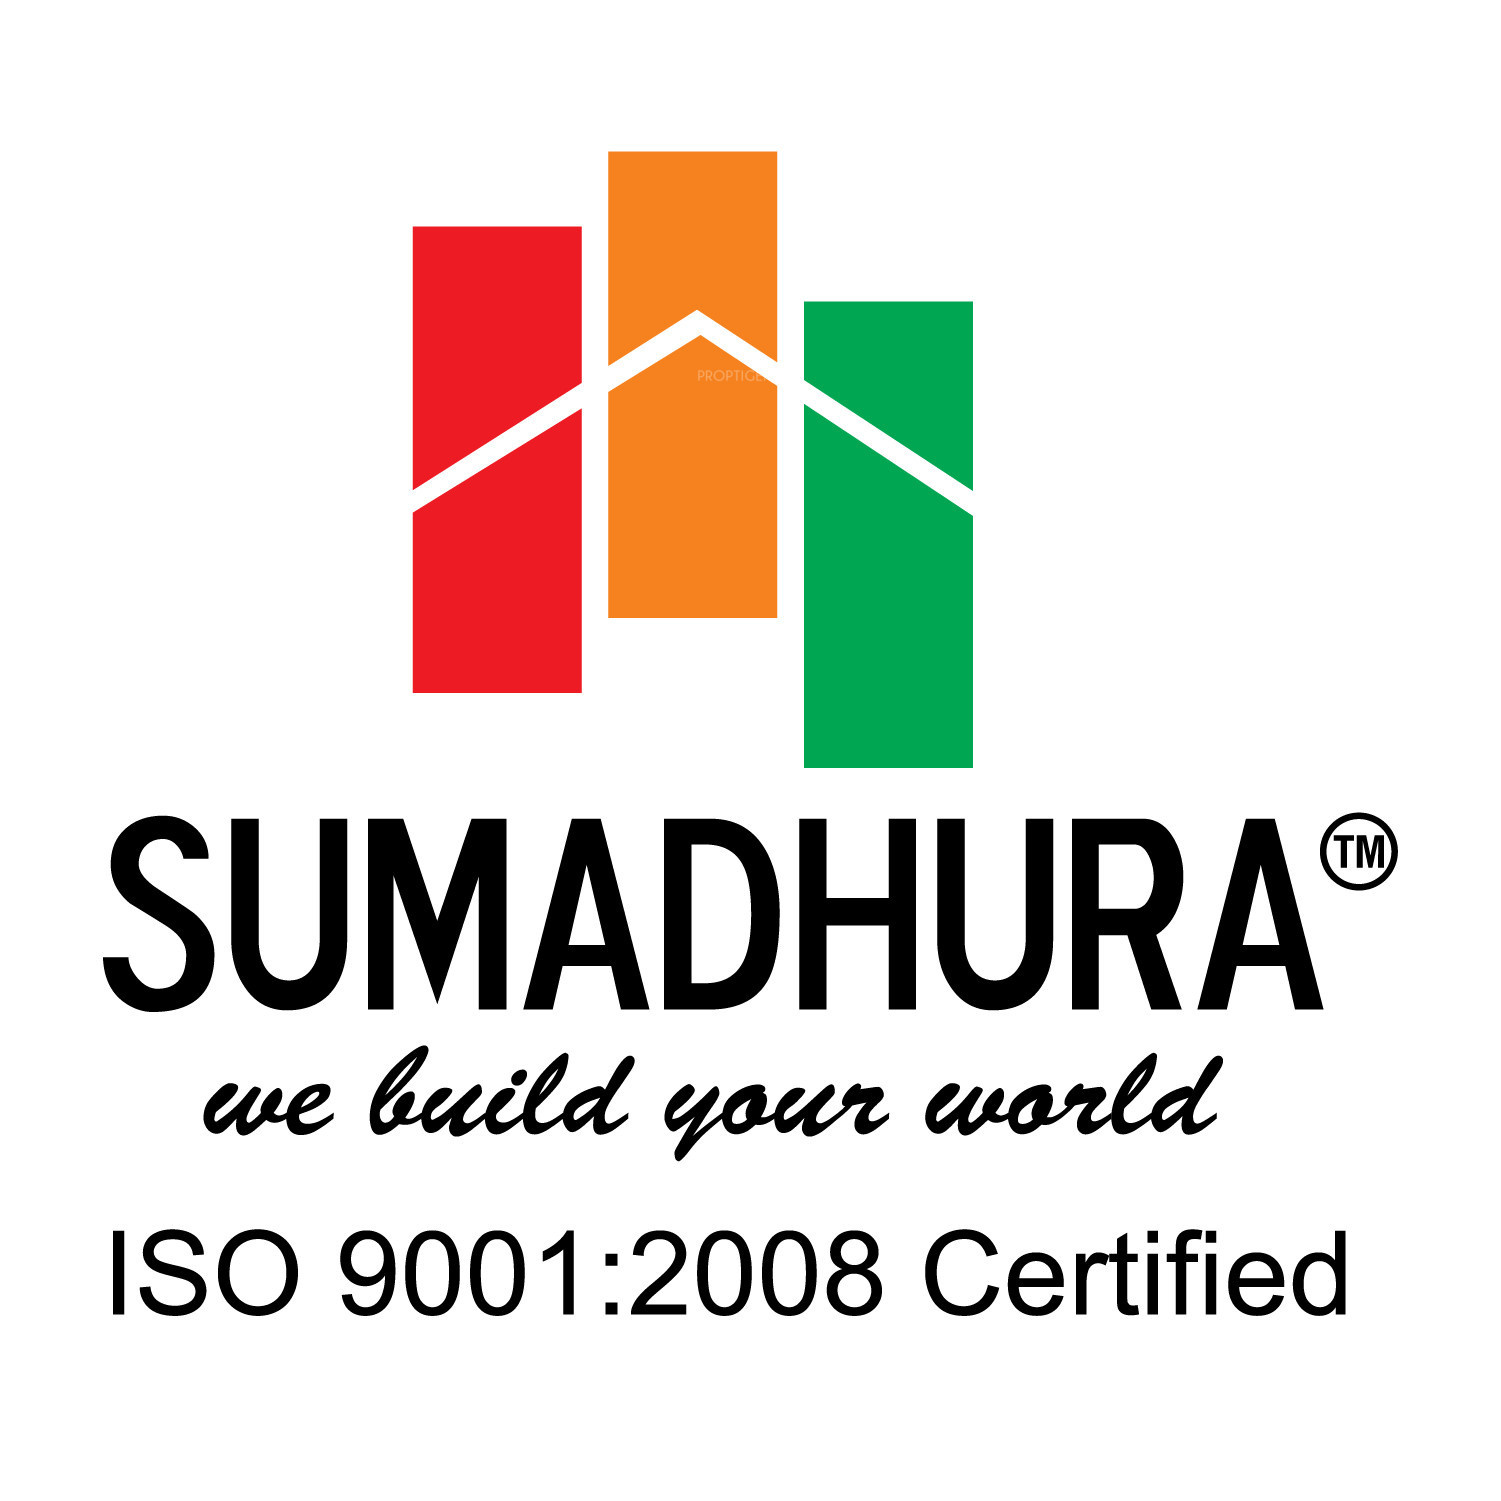 Sumadhura Infracon Pvt. Ltd